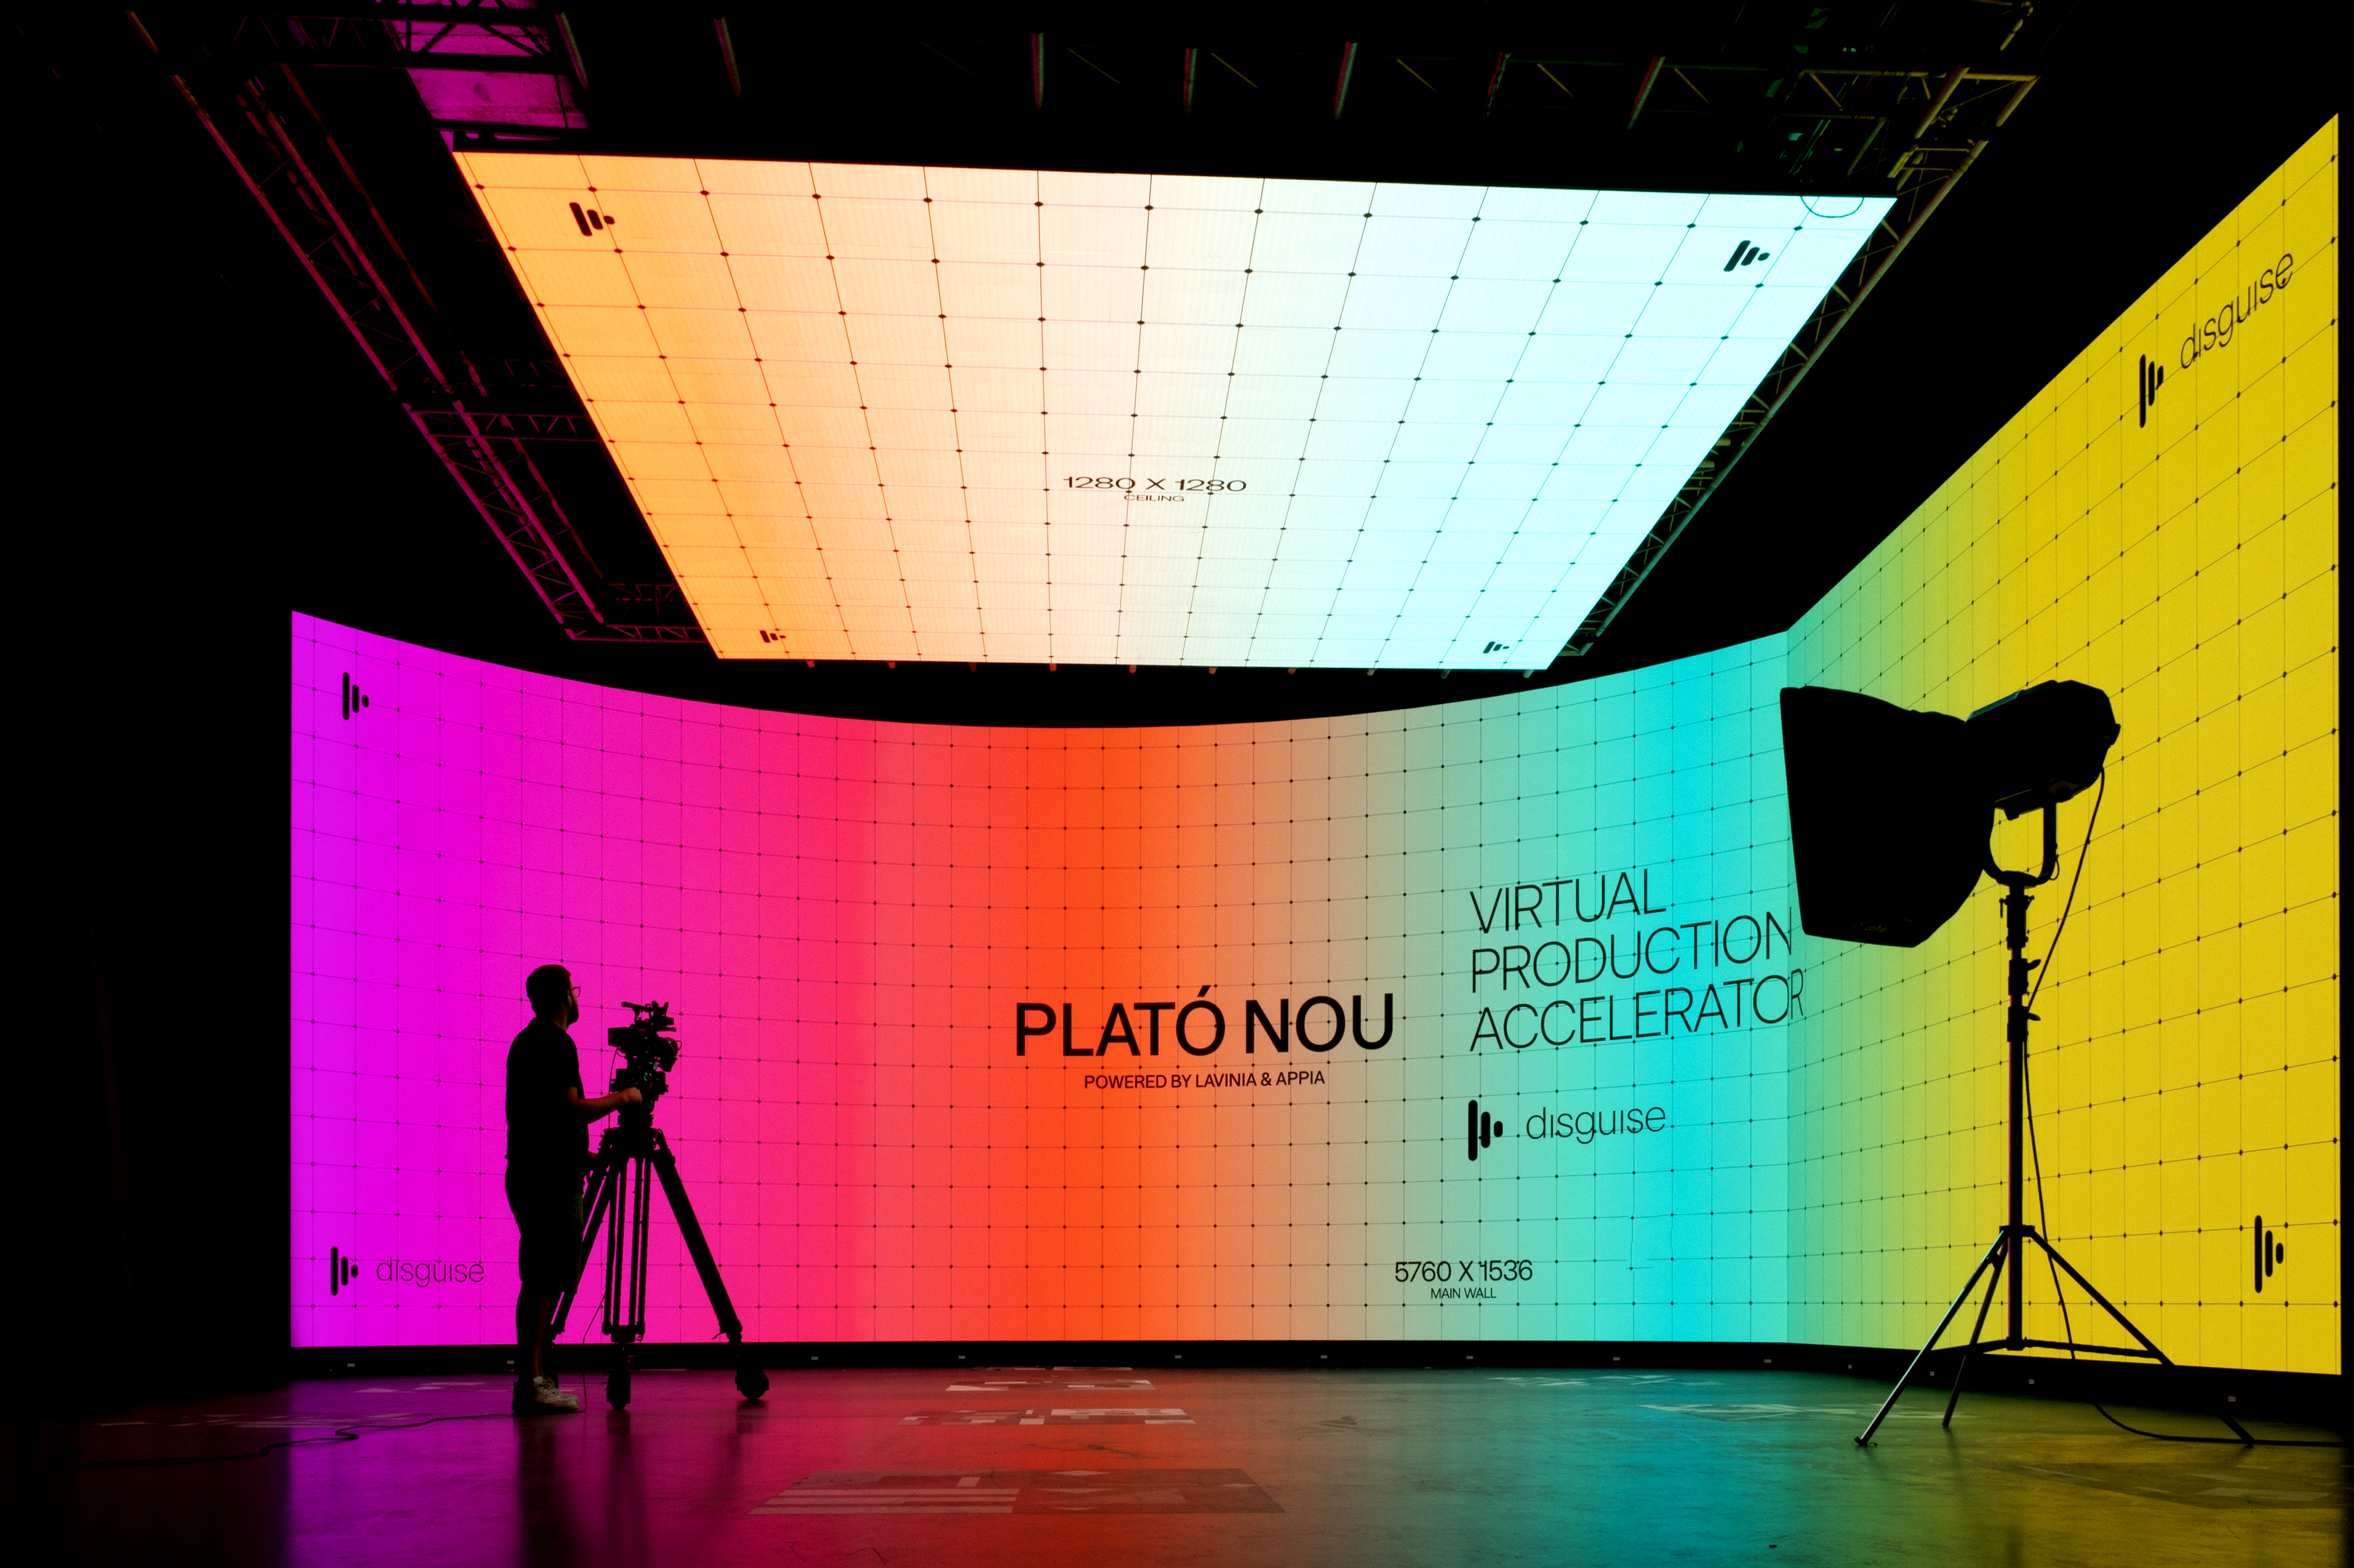 A neon screen displays the disguise, Plato Nou logos